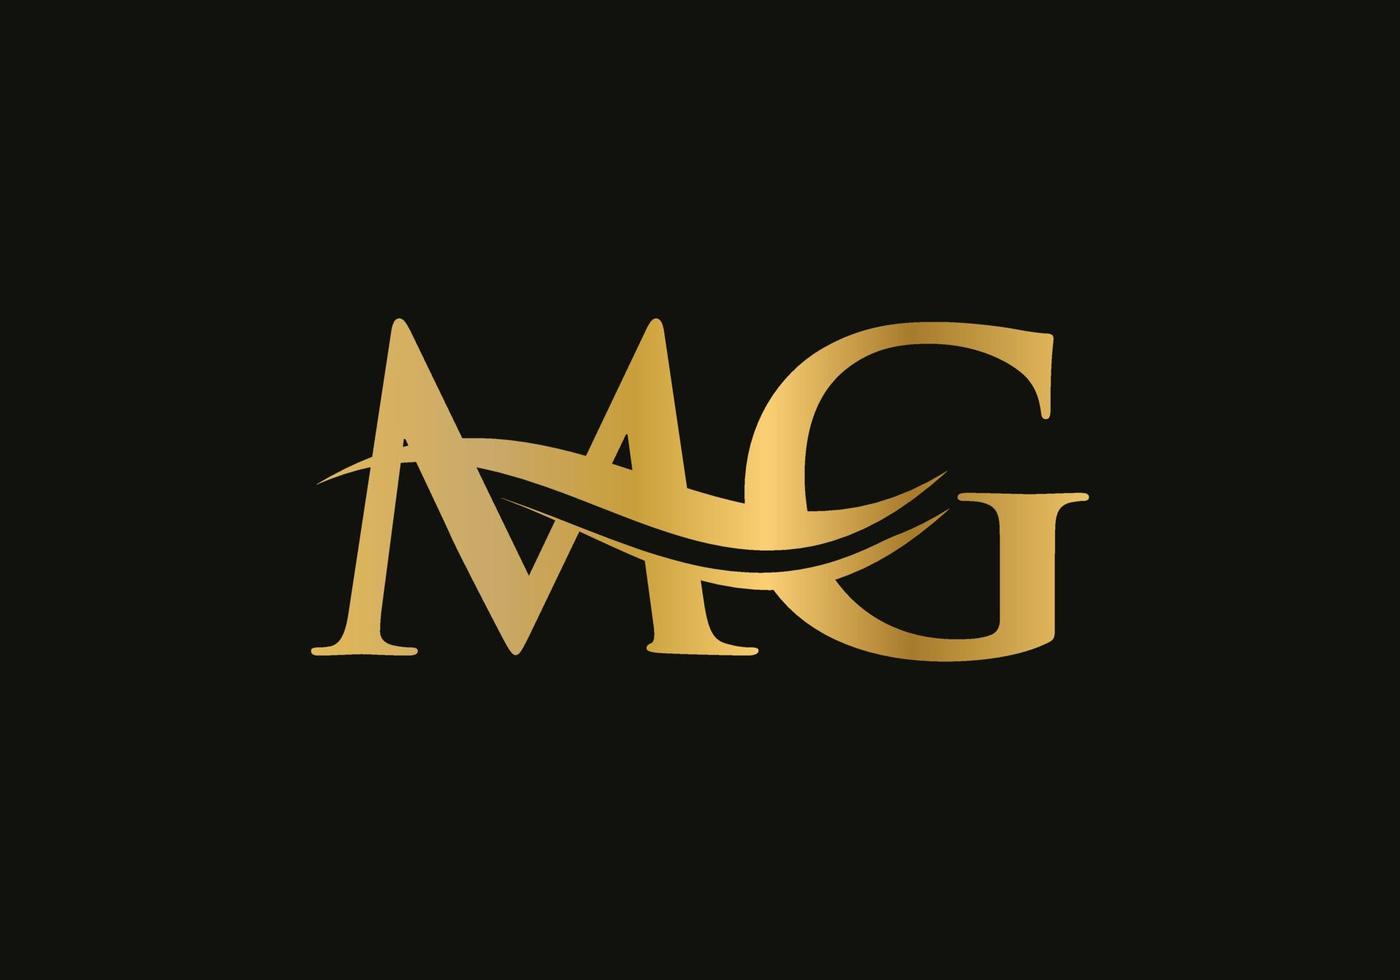 Initial linked letter MG logo design. Modern letter MG logo design vector with modern trendy